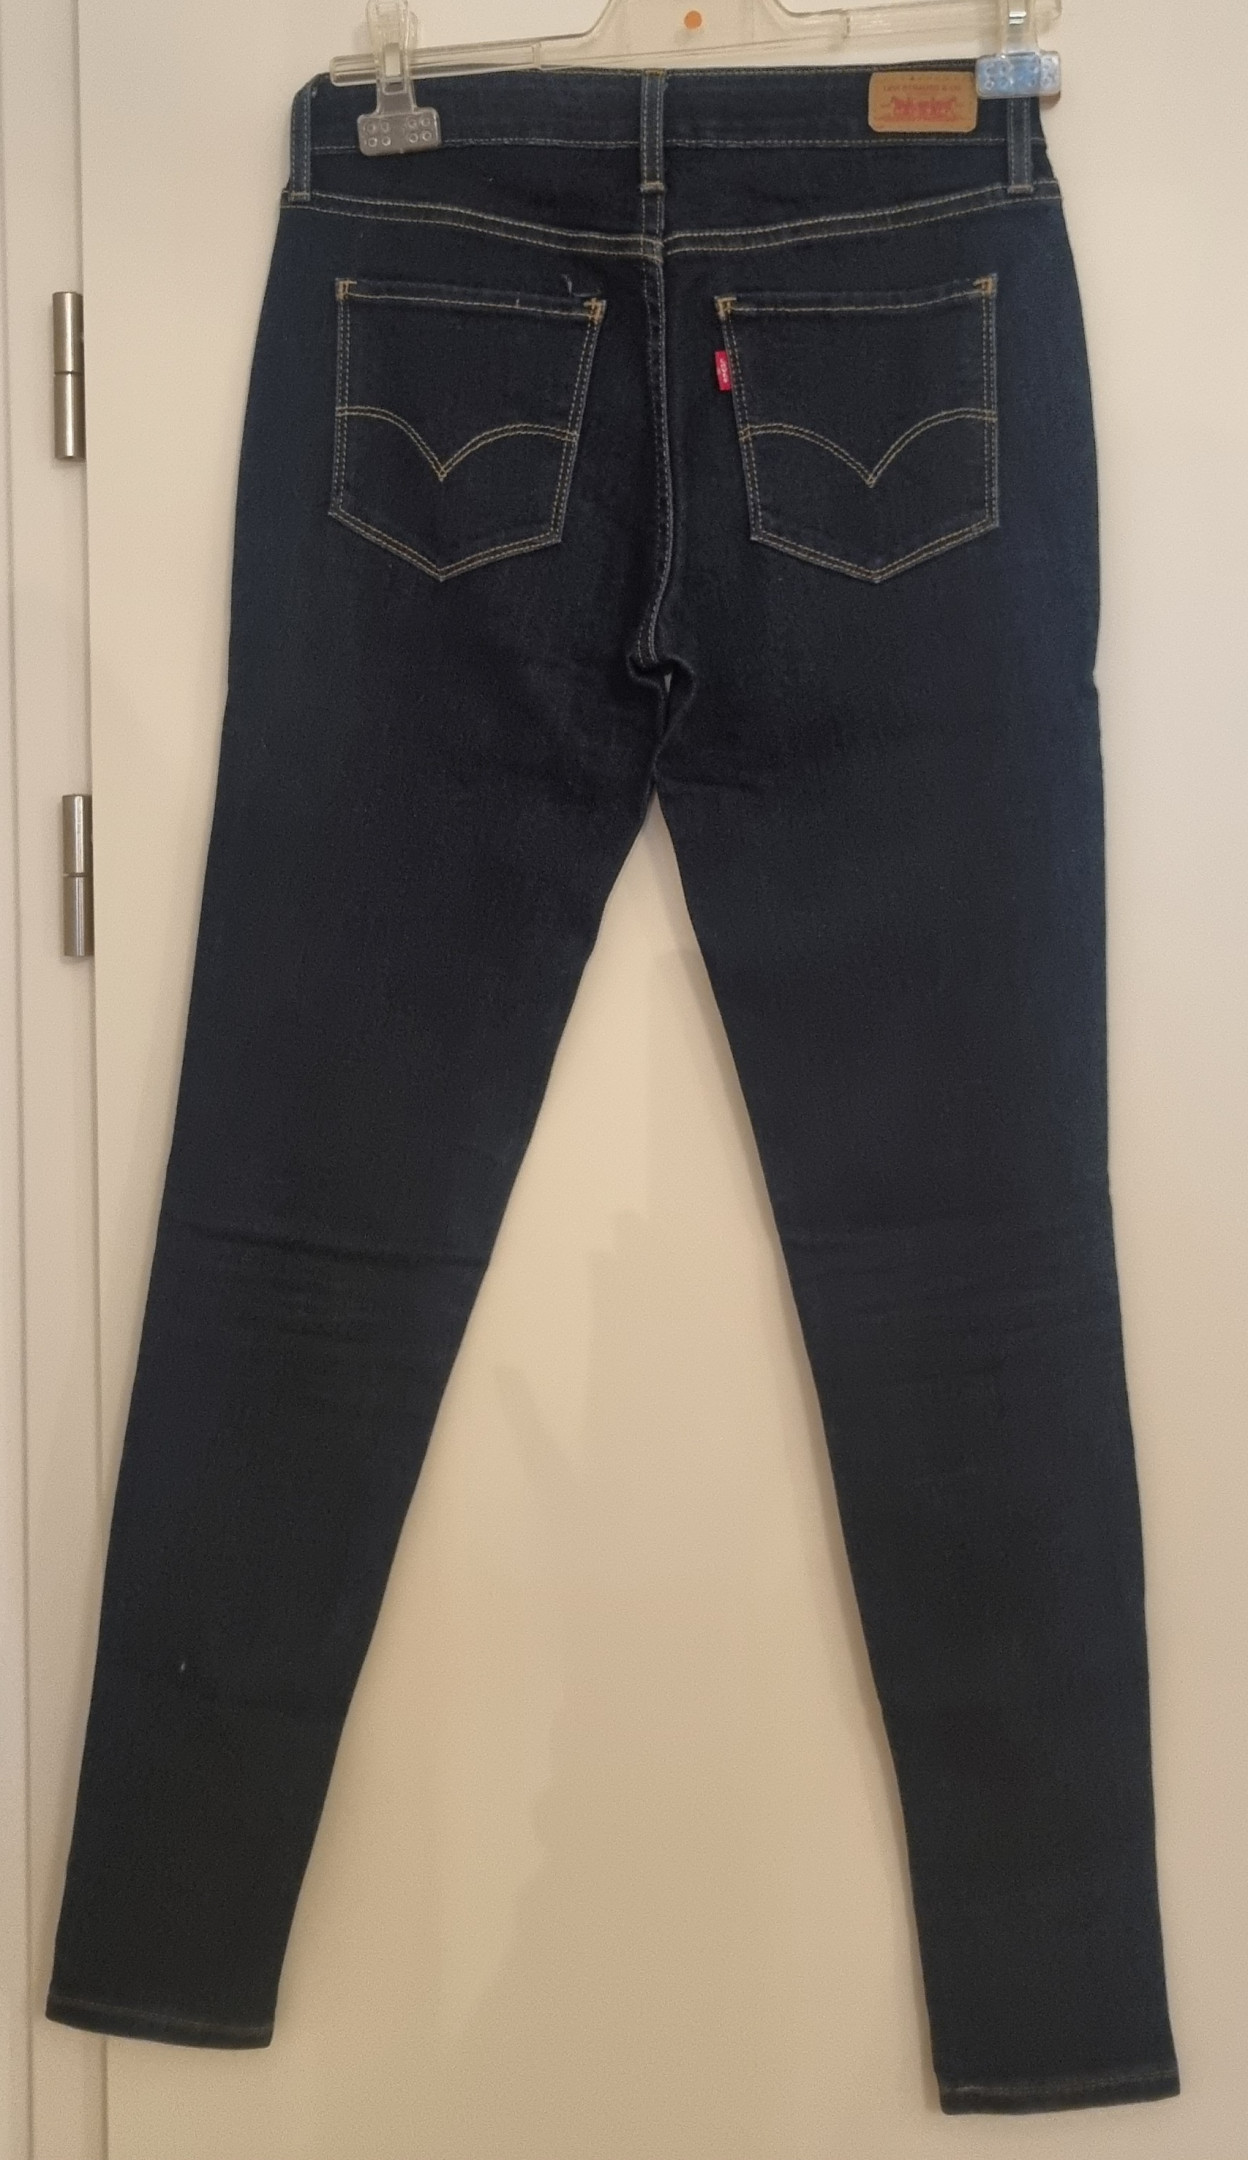 Levi's legging jeans